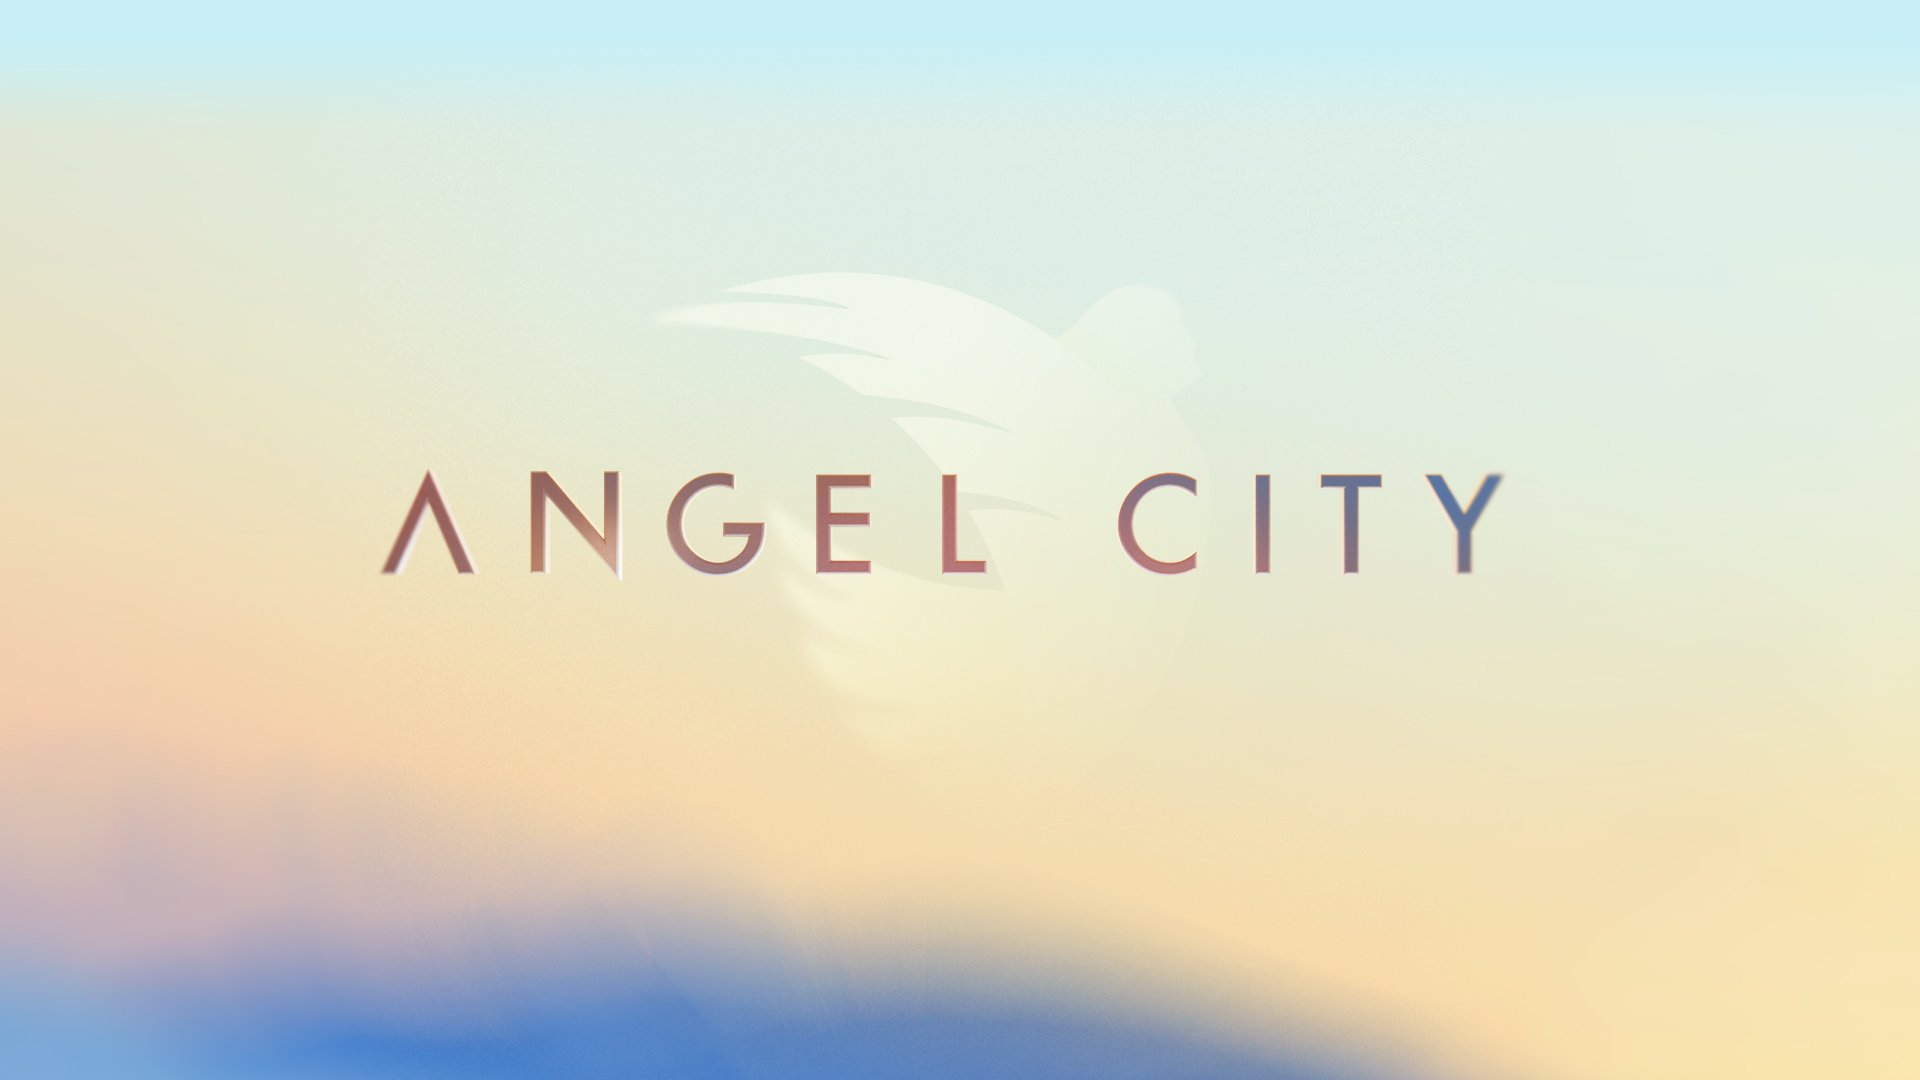 Angel-city-v10-01.jpg